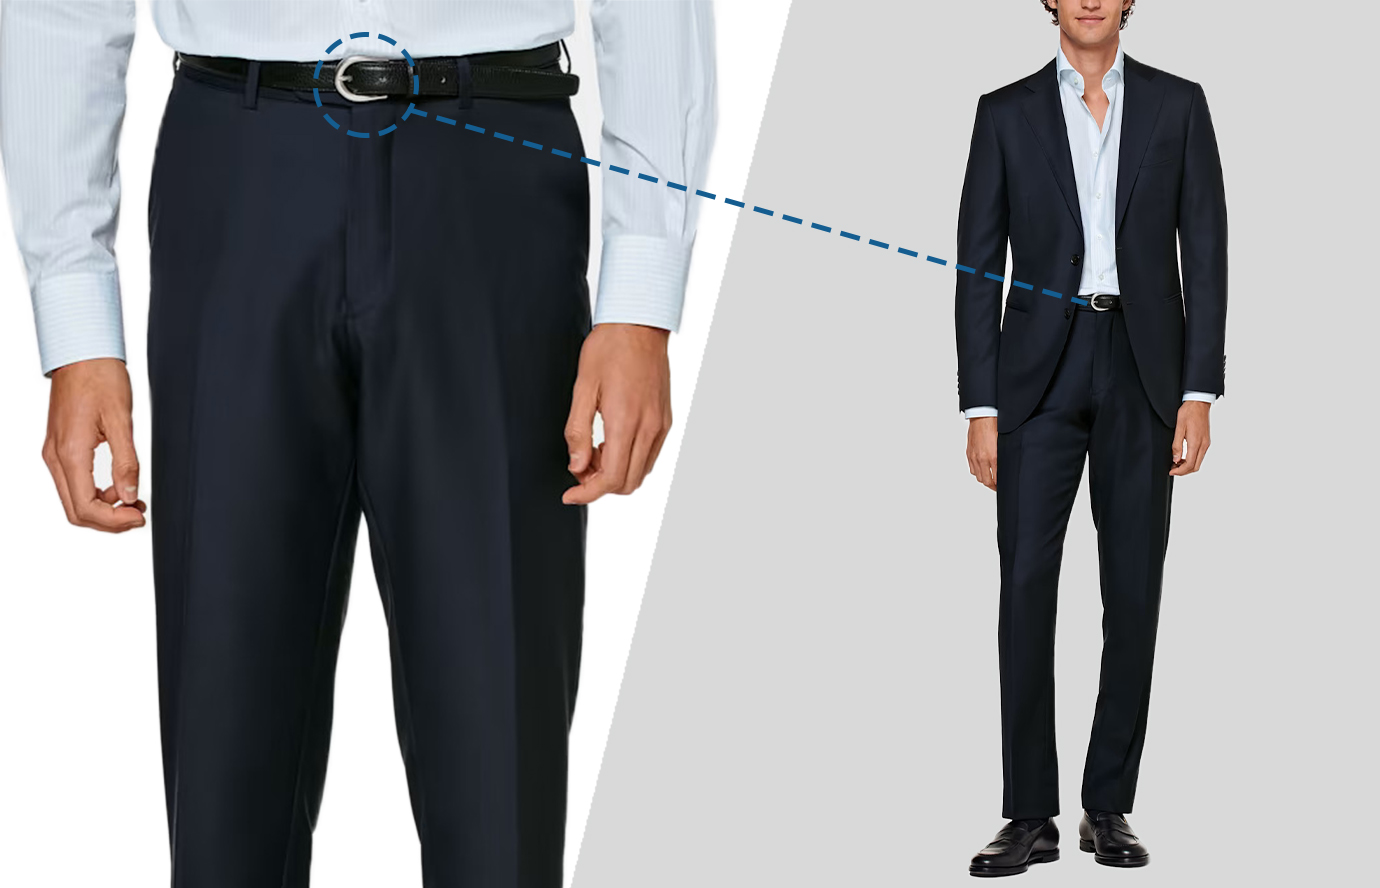 wear formal dress belt with a suit